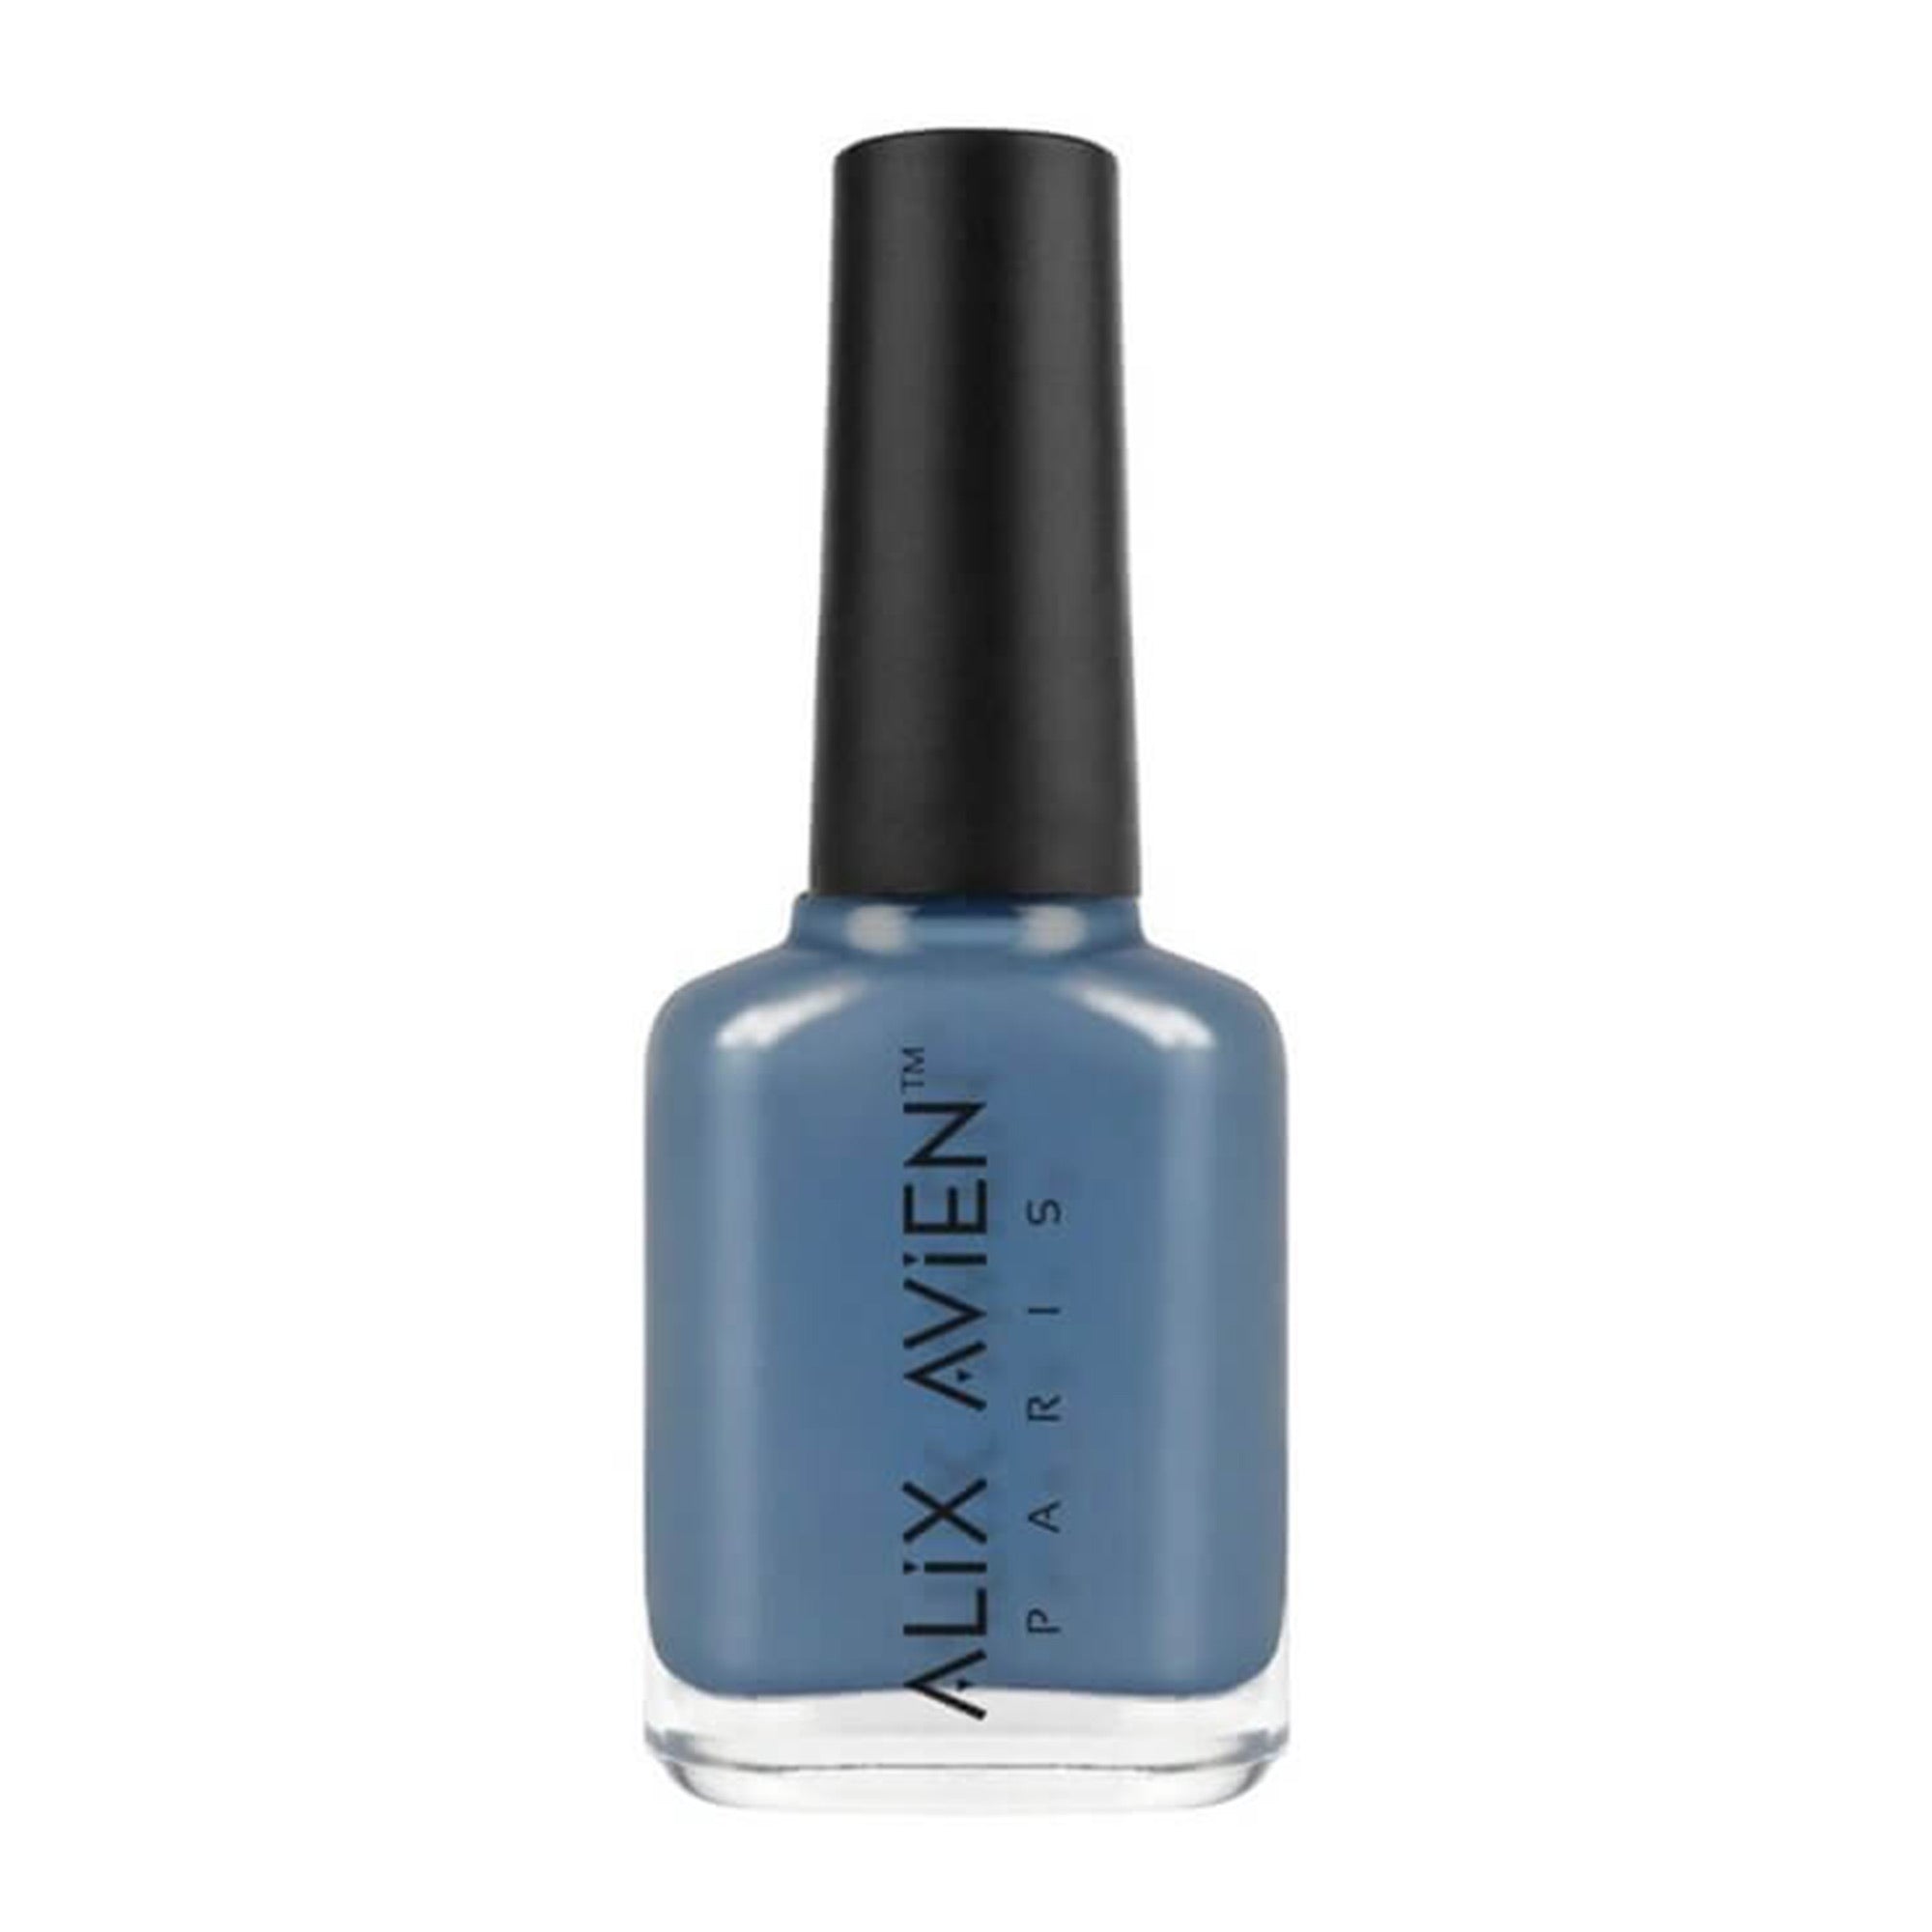 Alix Avien - Nail Polish No.111 (Deep Blue Sea)